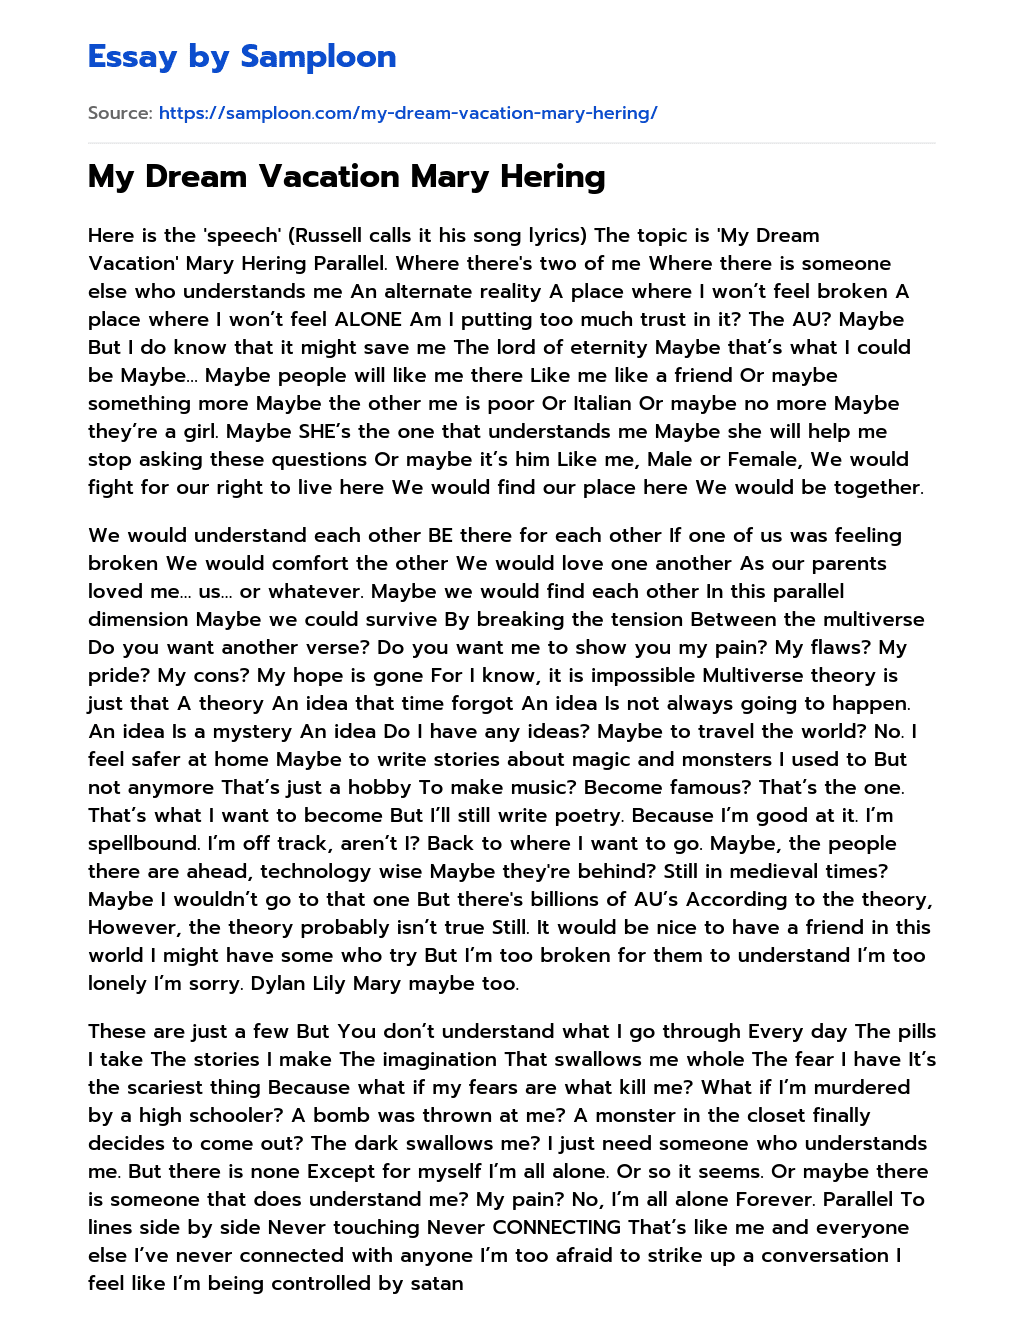 My Dream Vacation Mary Hering essay